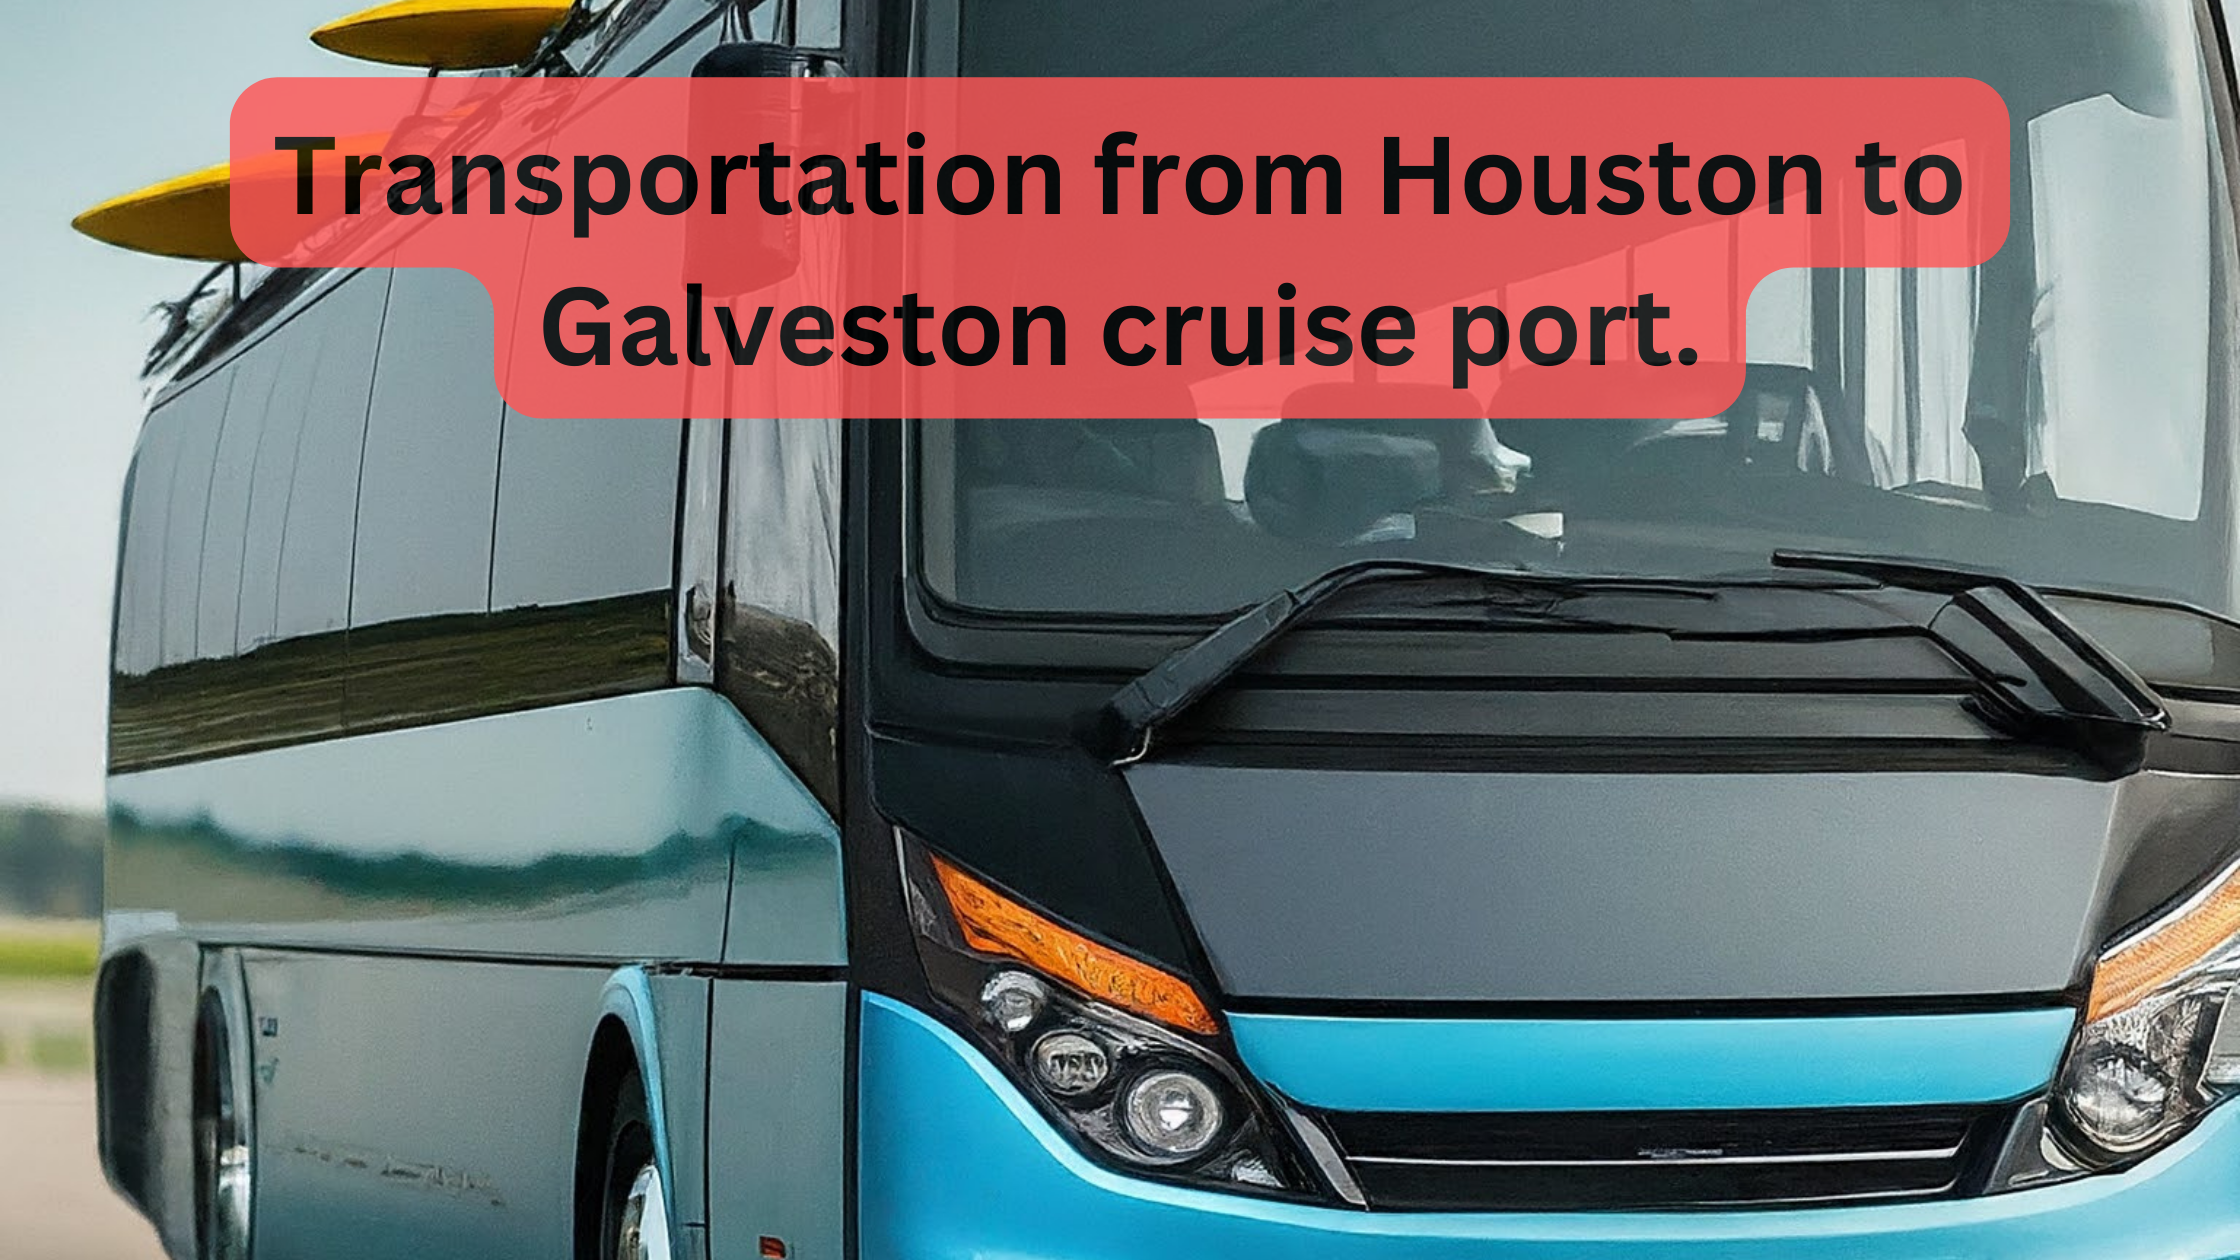 Transportation from Houston to Galveston cruise port.